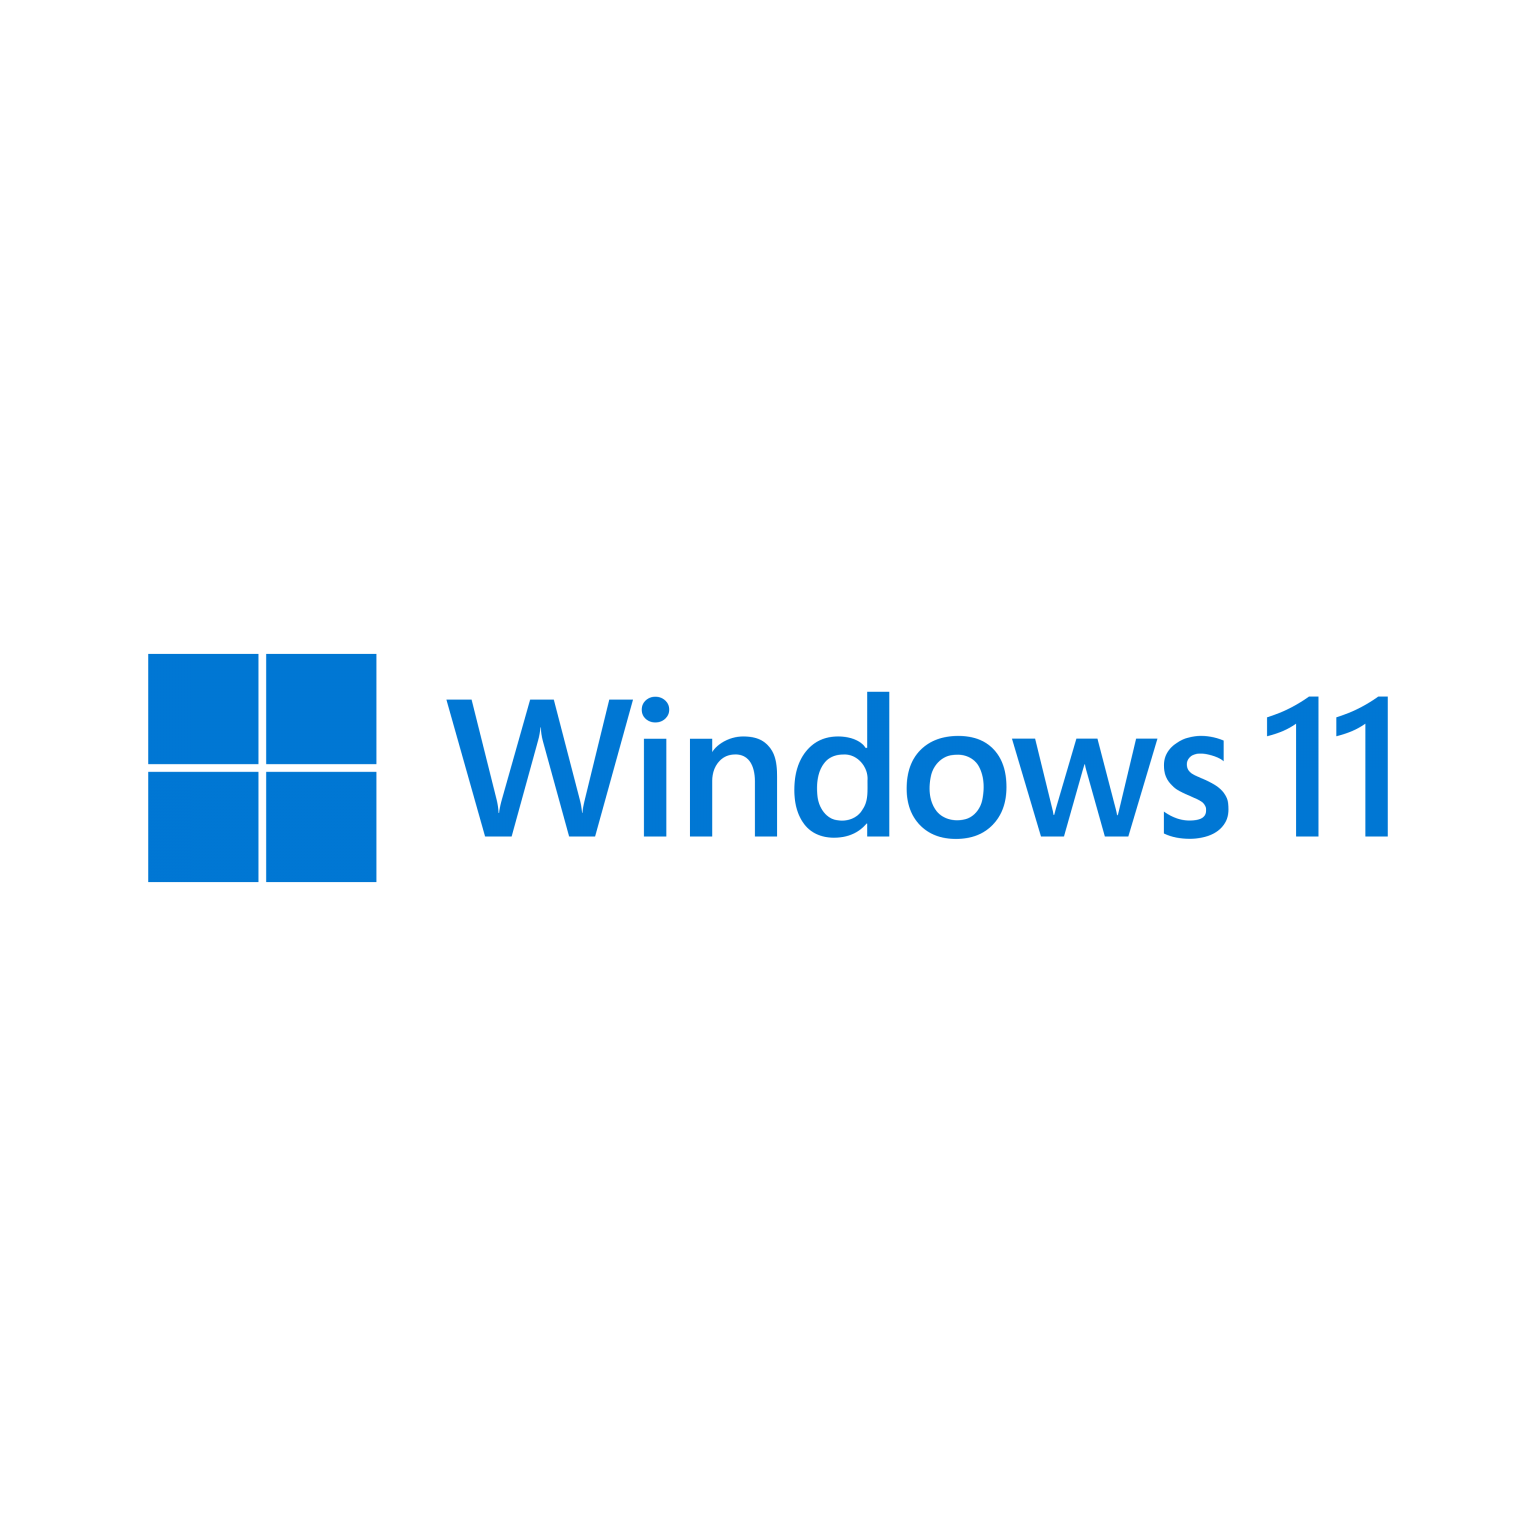 Windows 11 Logo Transparent Background Pbsfcczihdprem Learn About ...